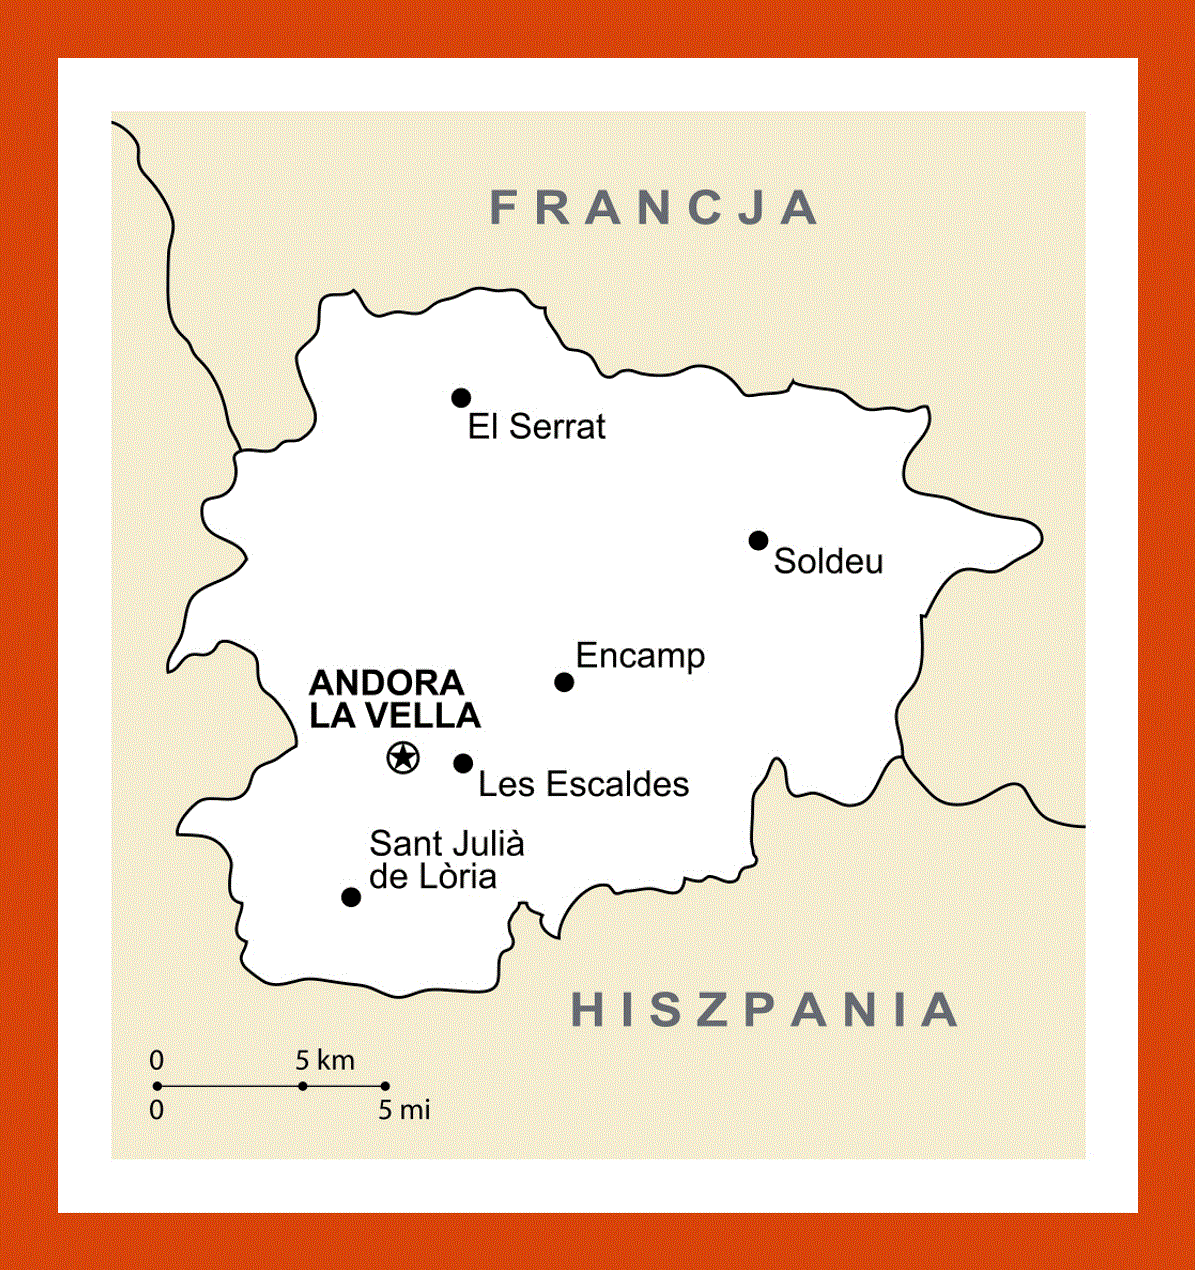 Political map of Andorra